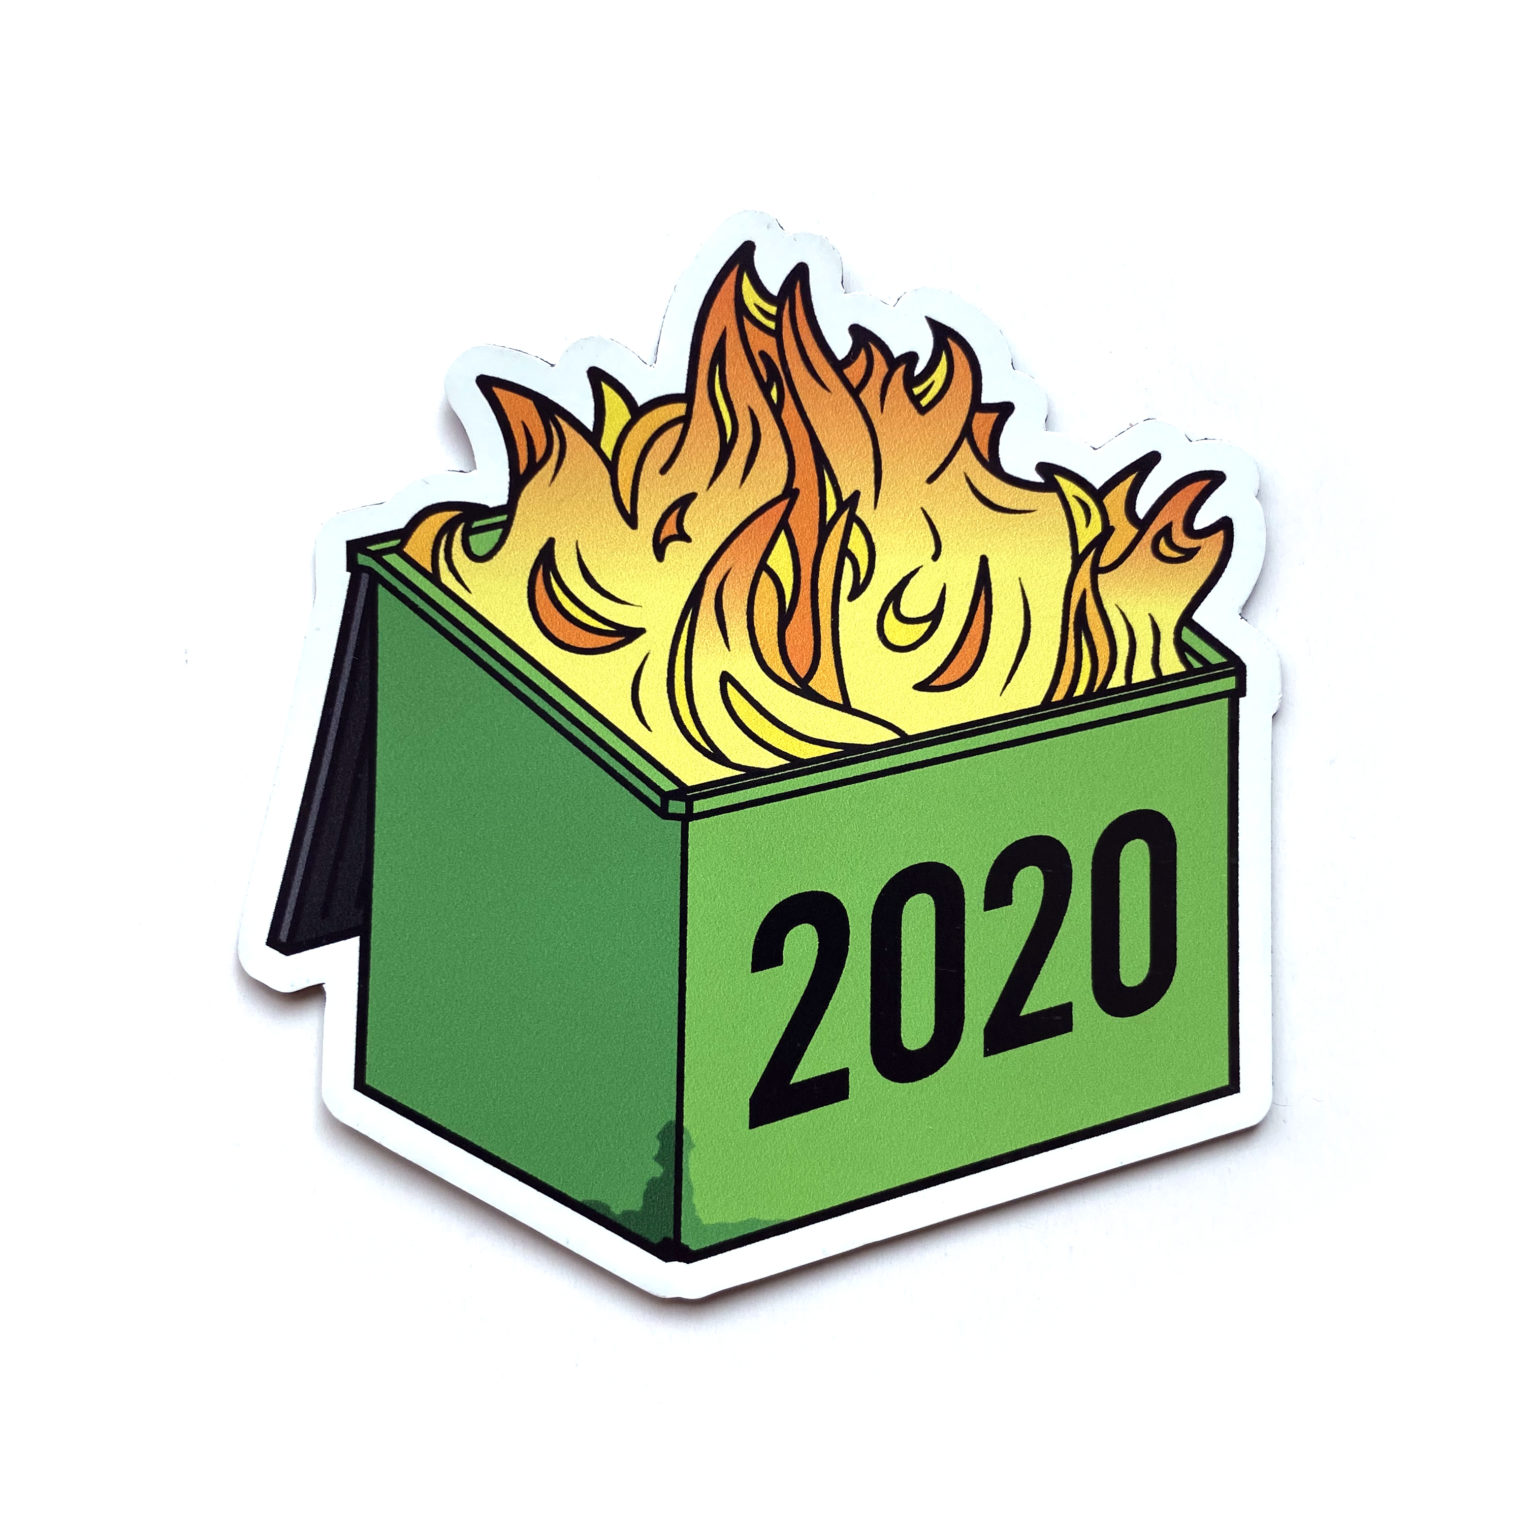 2020 dumpster fire png